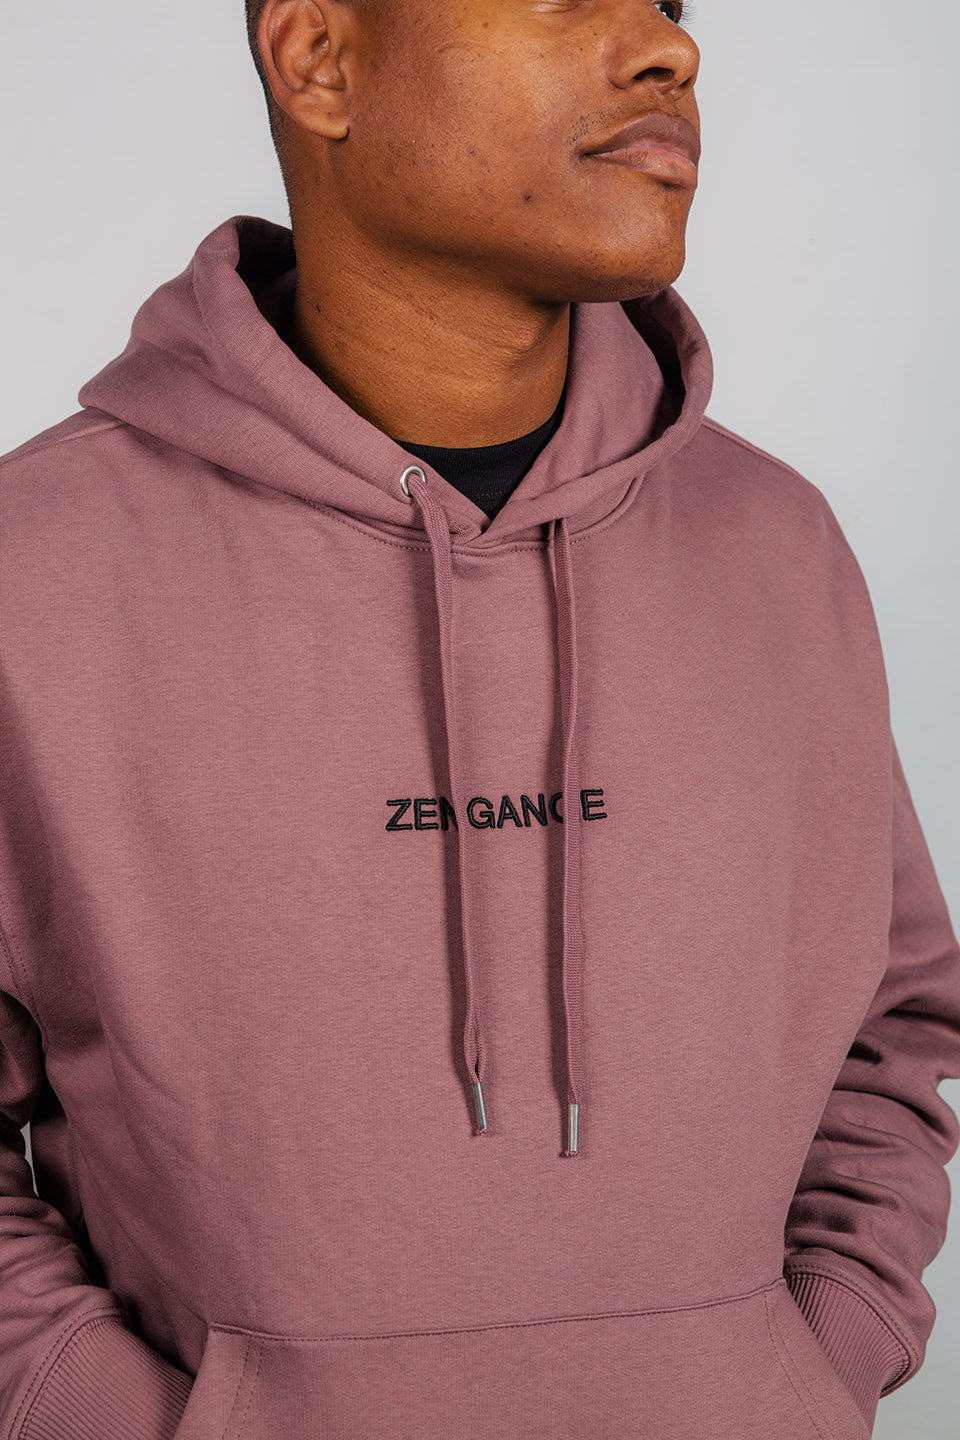 Zengange premium – Magenta Brown tracksuit with shirt